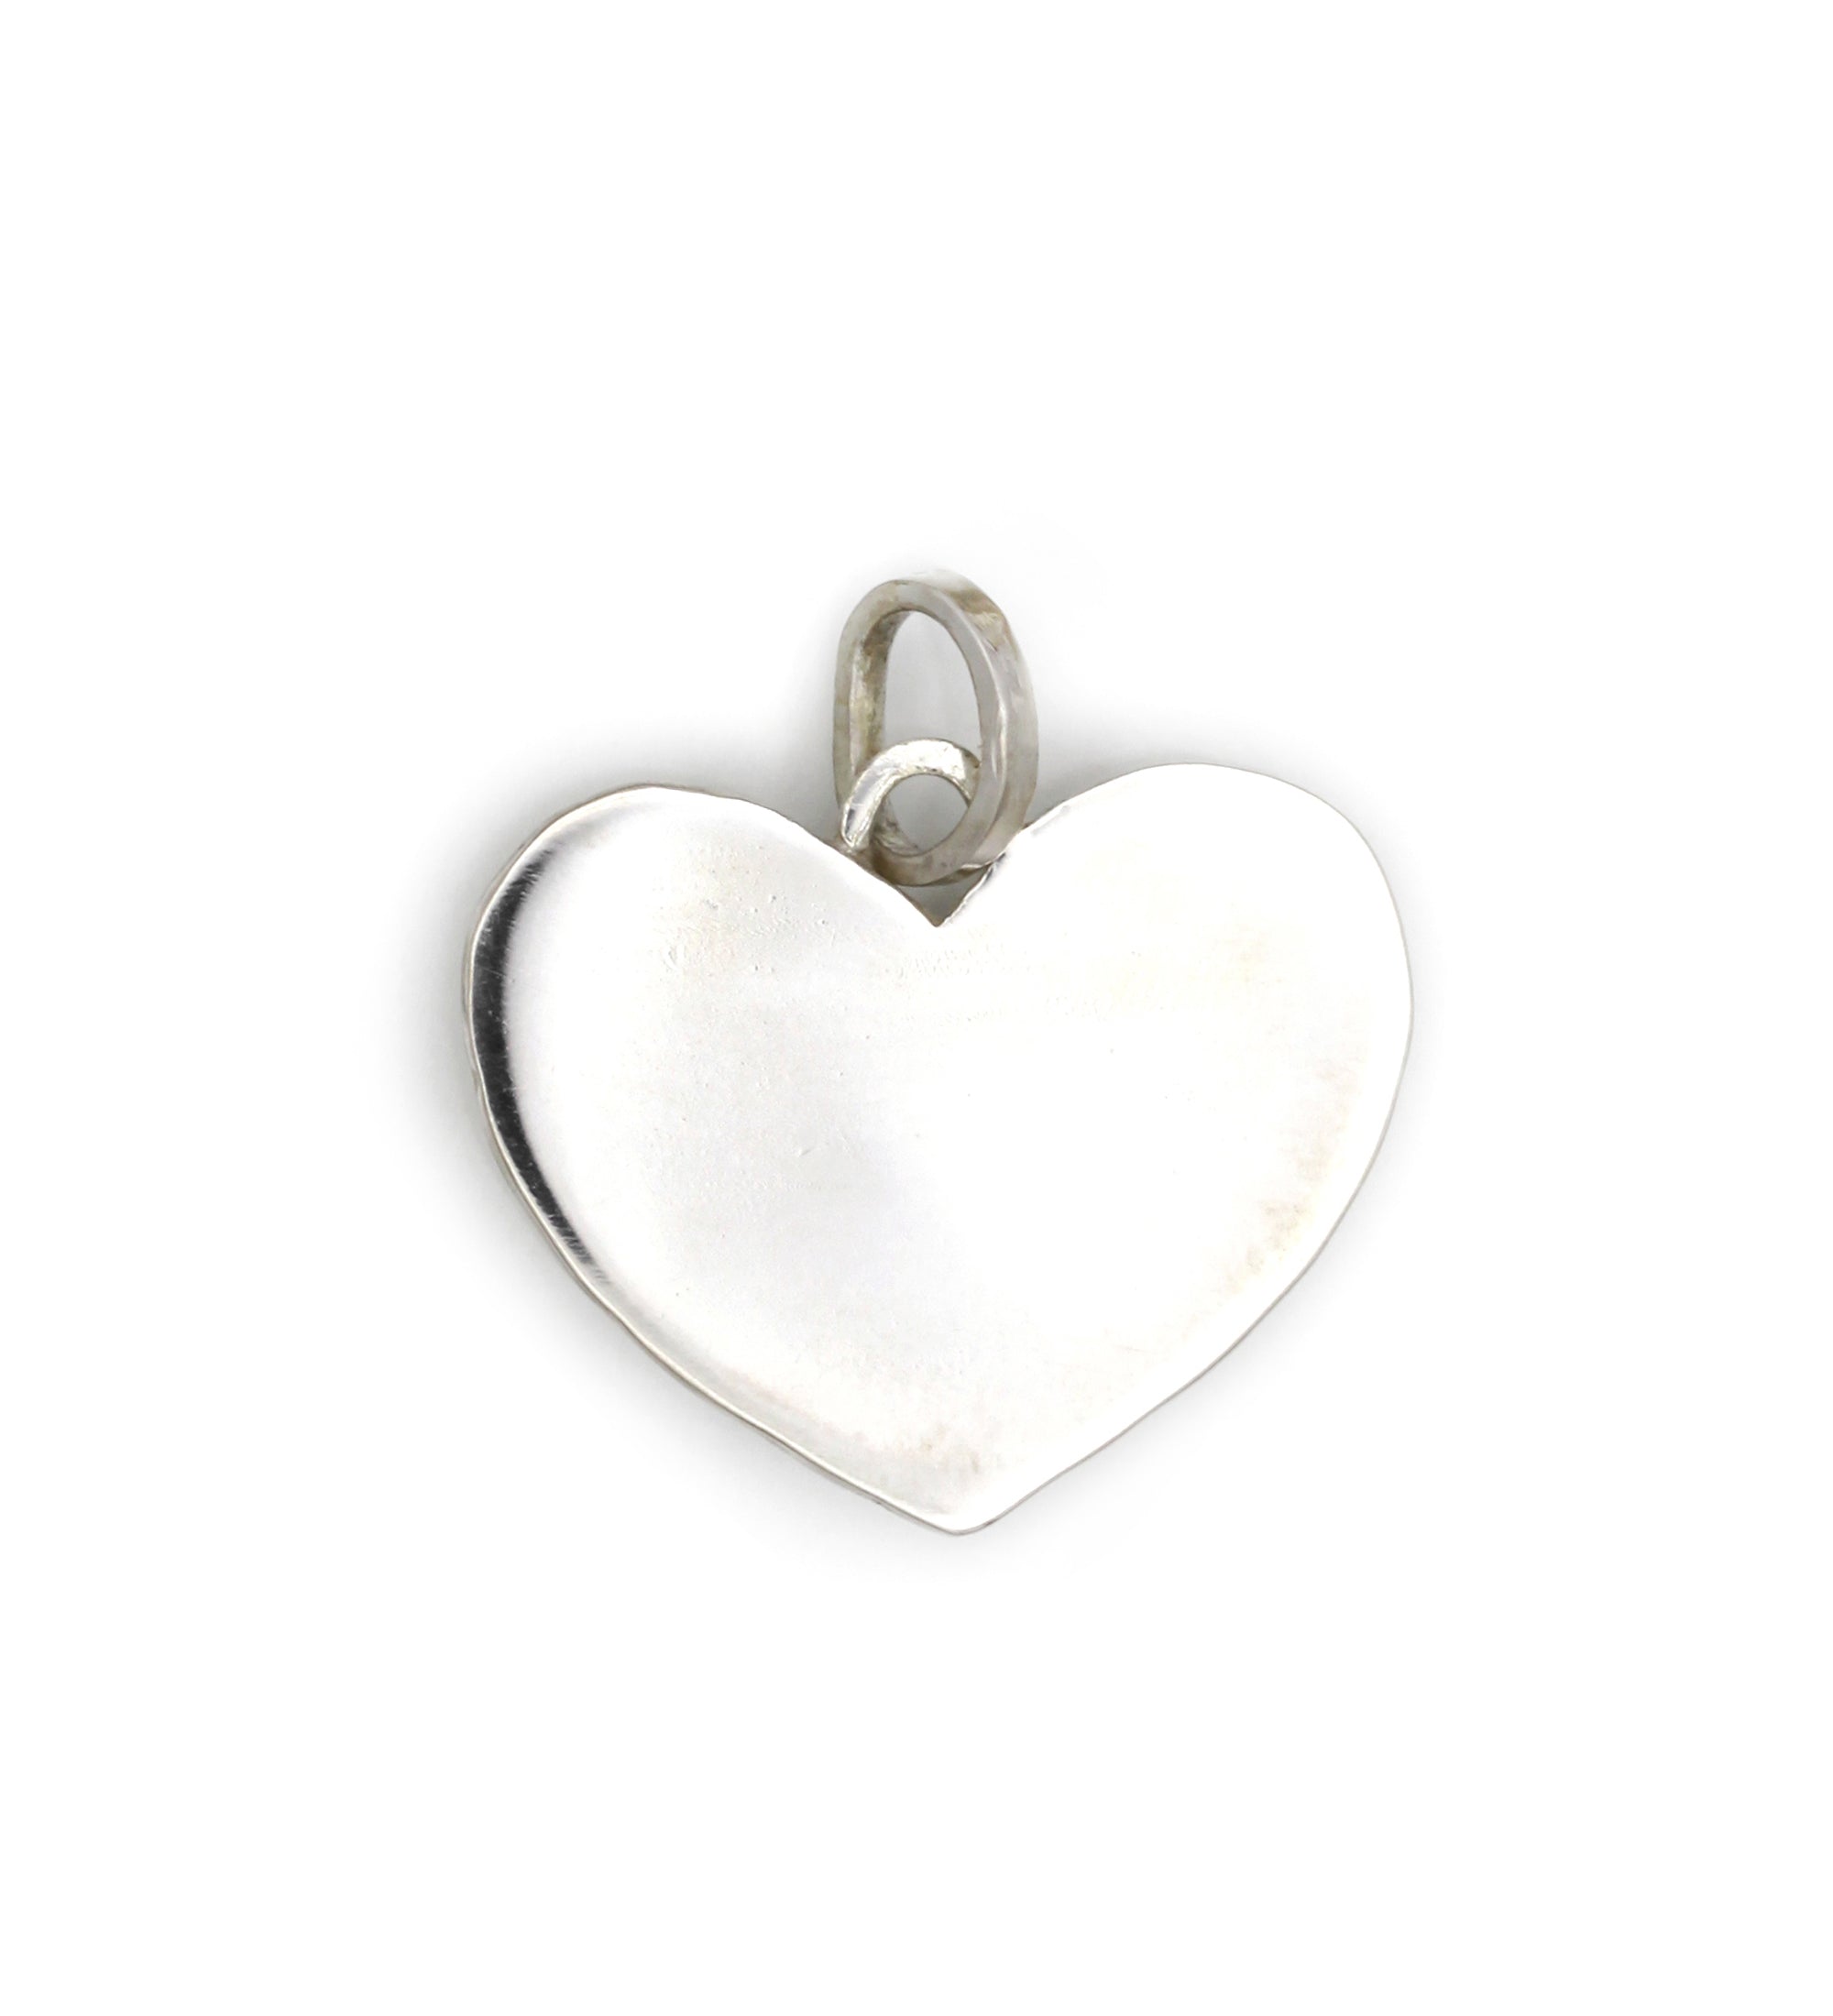 Road Sign Heart Pendant, Large Handmade DANGER Heart Charm in Sterling and 14K